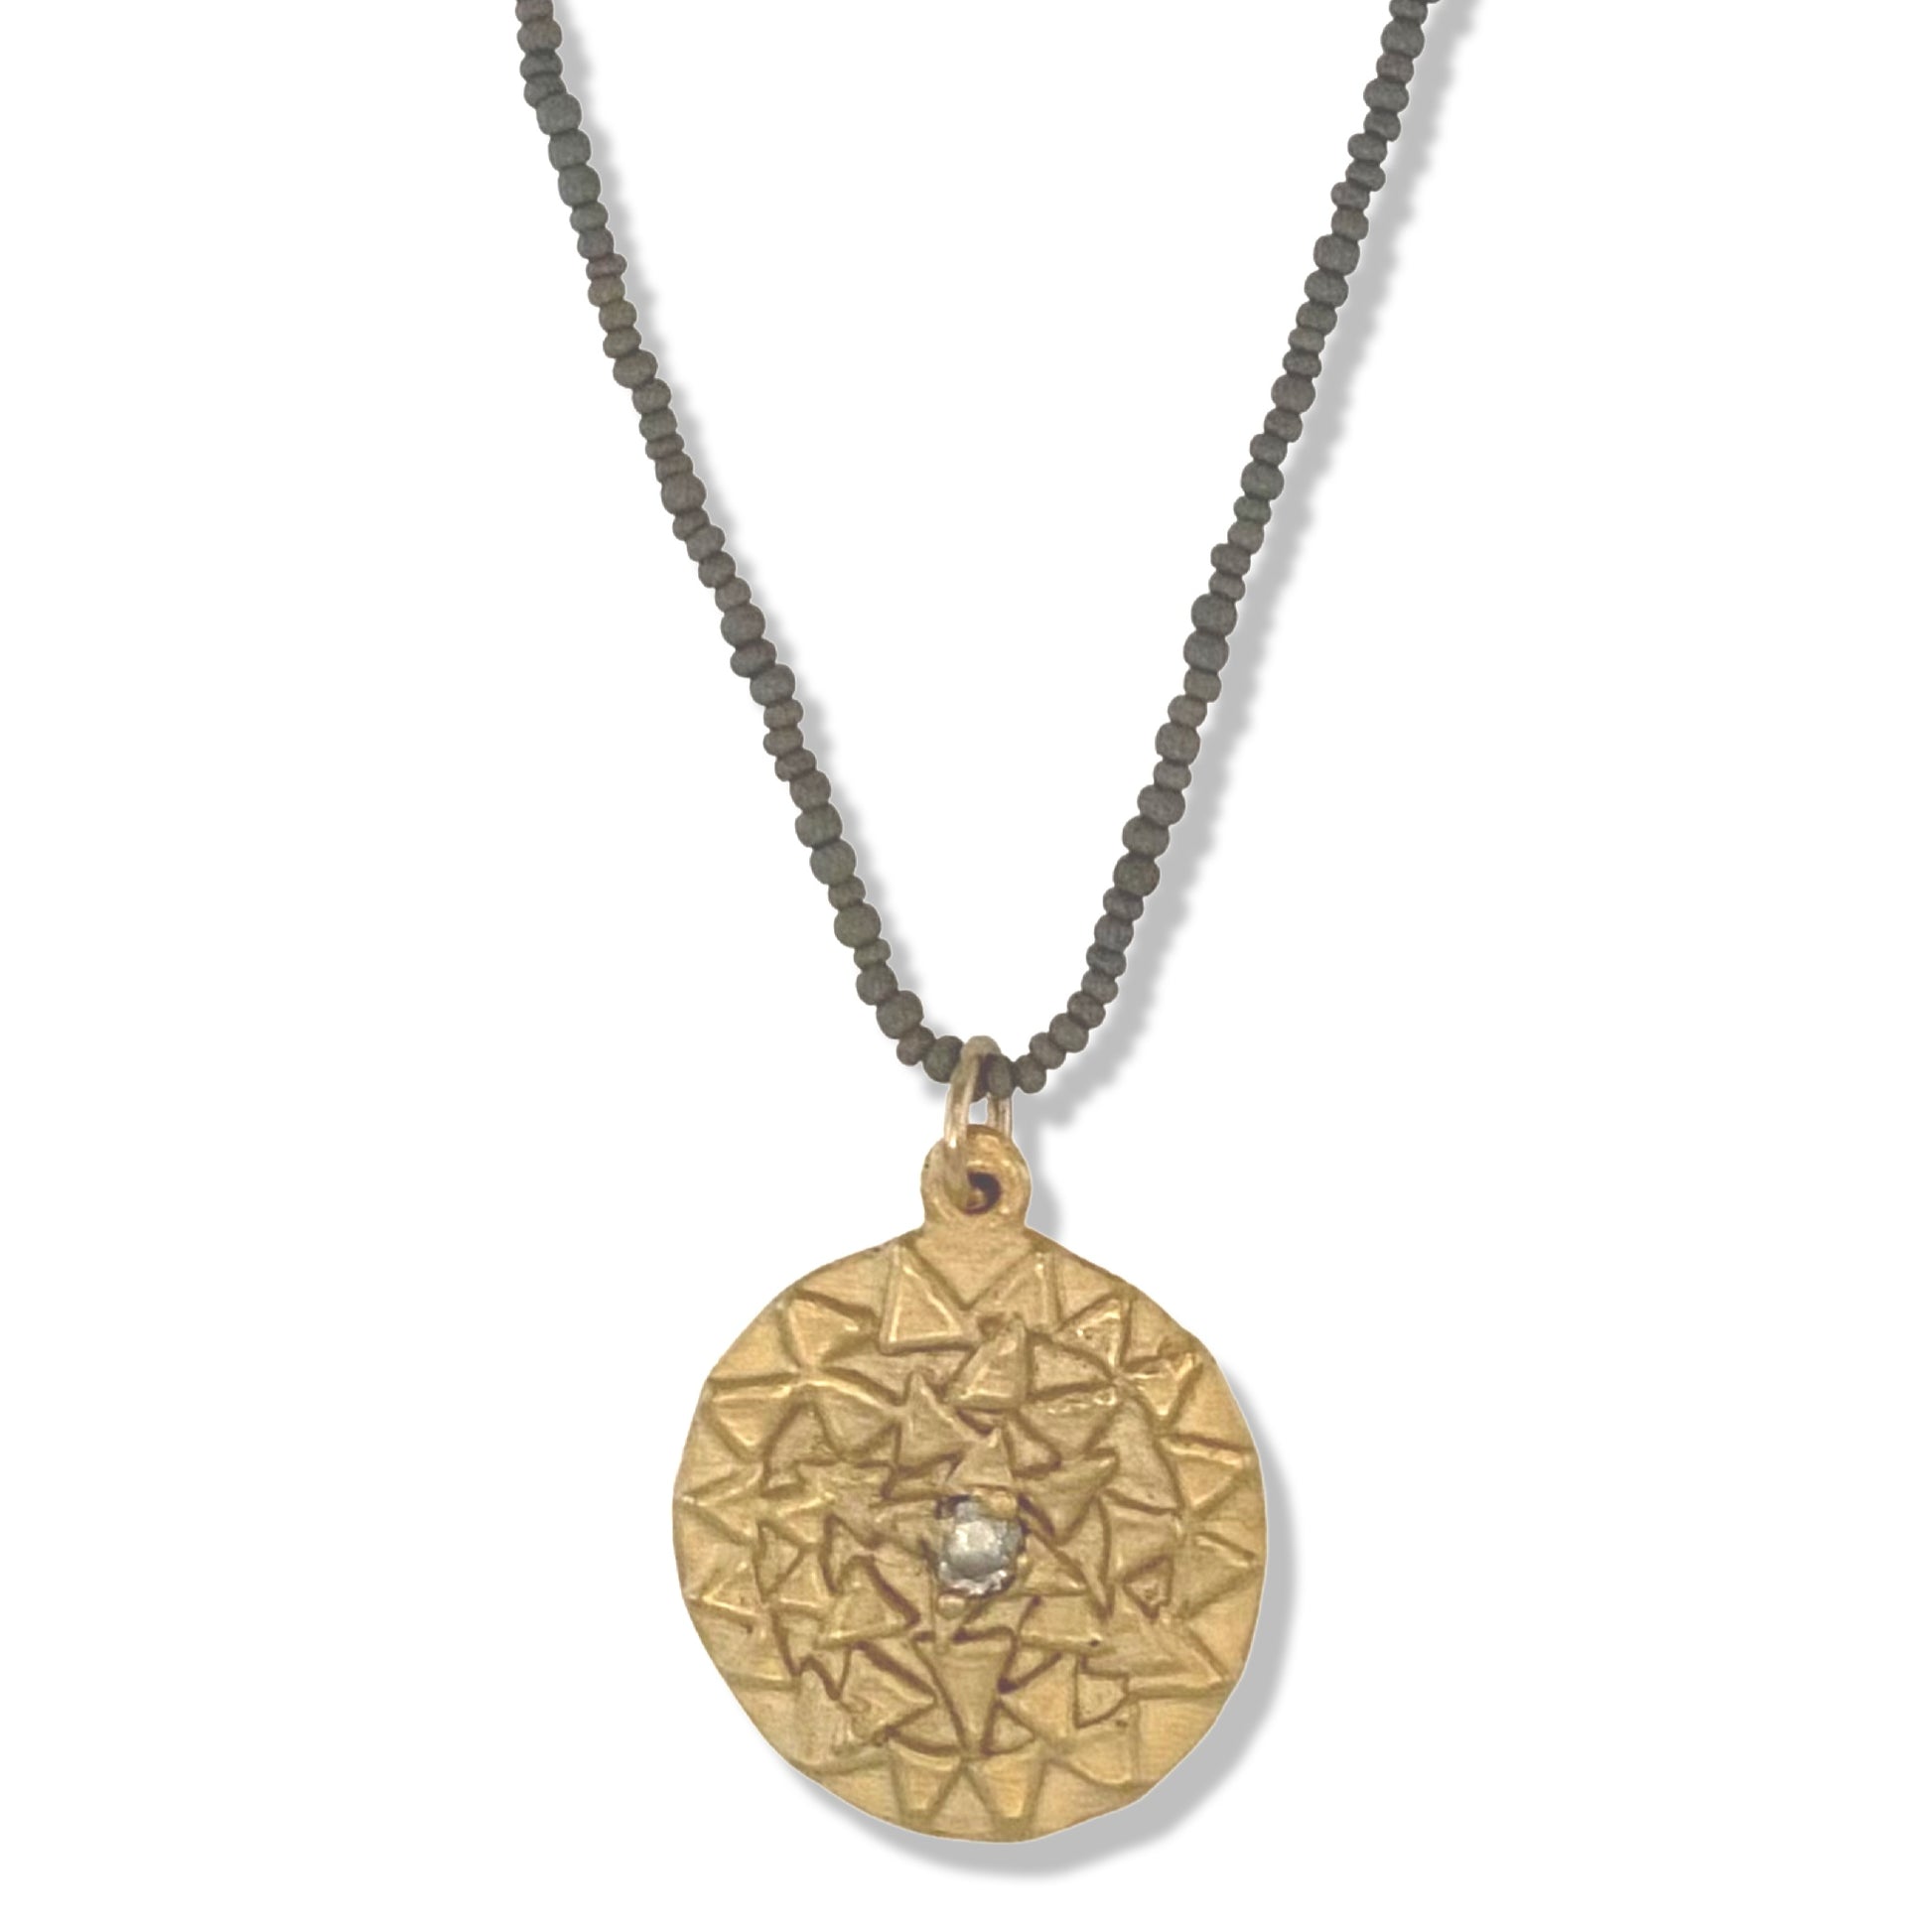 Surya Necklace in  Gold on Charcoal Beads | Nalu |Nantucket